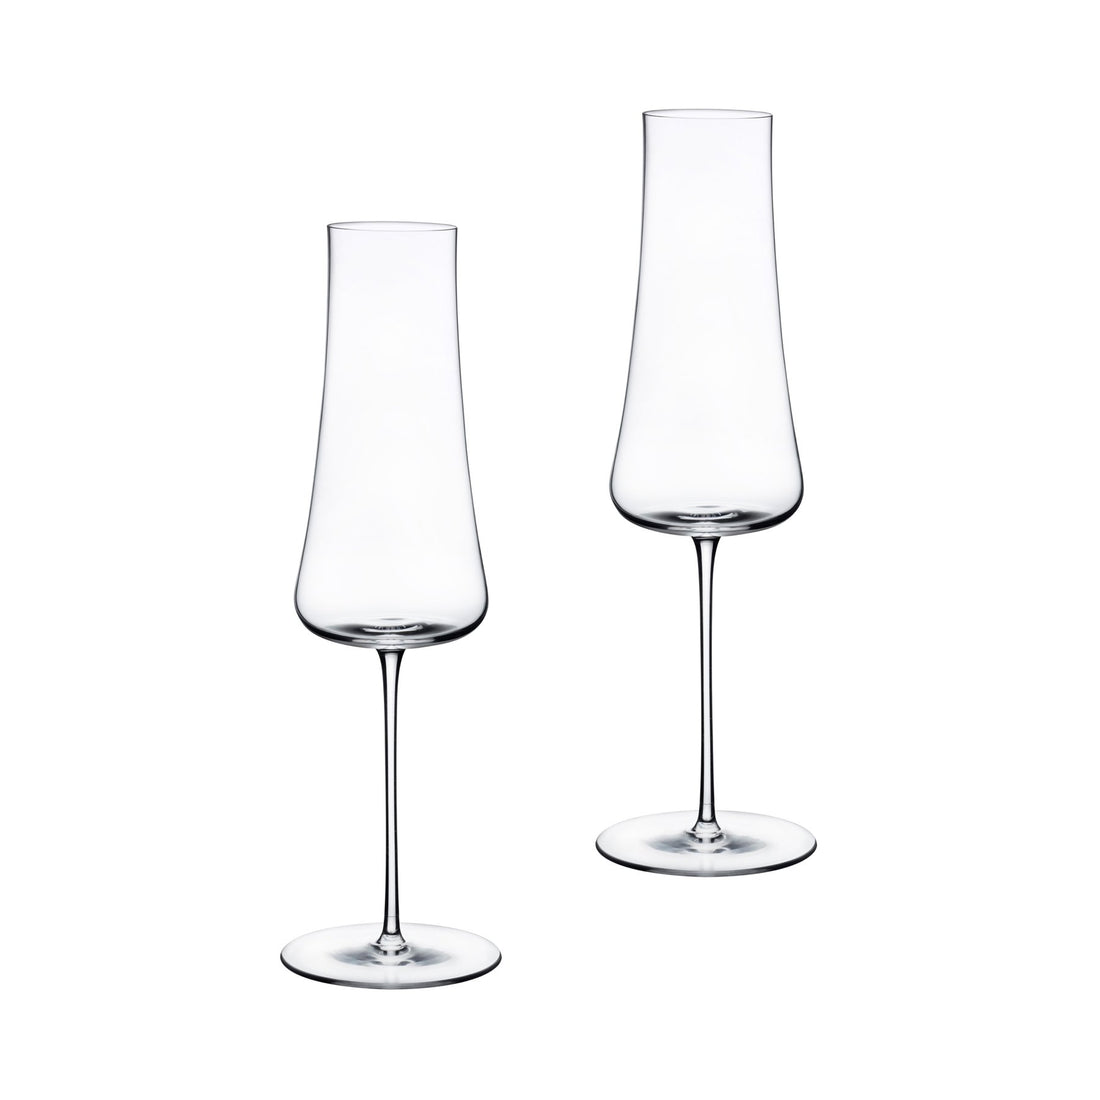 Champagne Glasses, Set of 12 Champagne Flutes with Unique Shape, Long stem  Sparkling Wine glasses fo…See more Champagne Glasses, Set of 12 Champagne